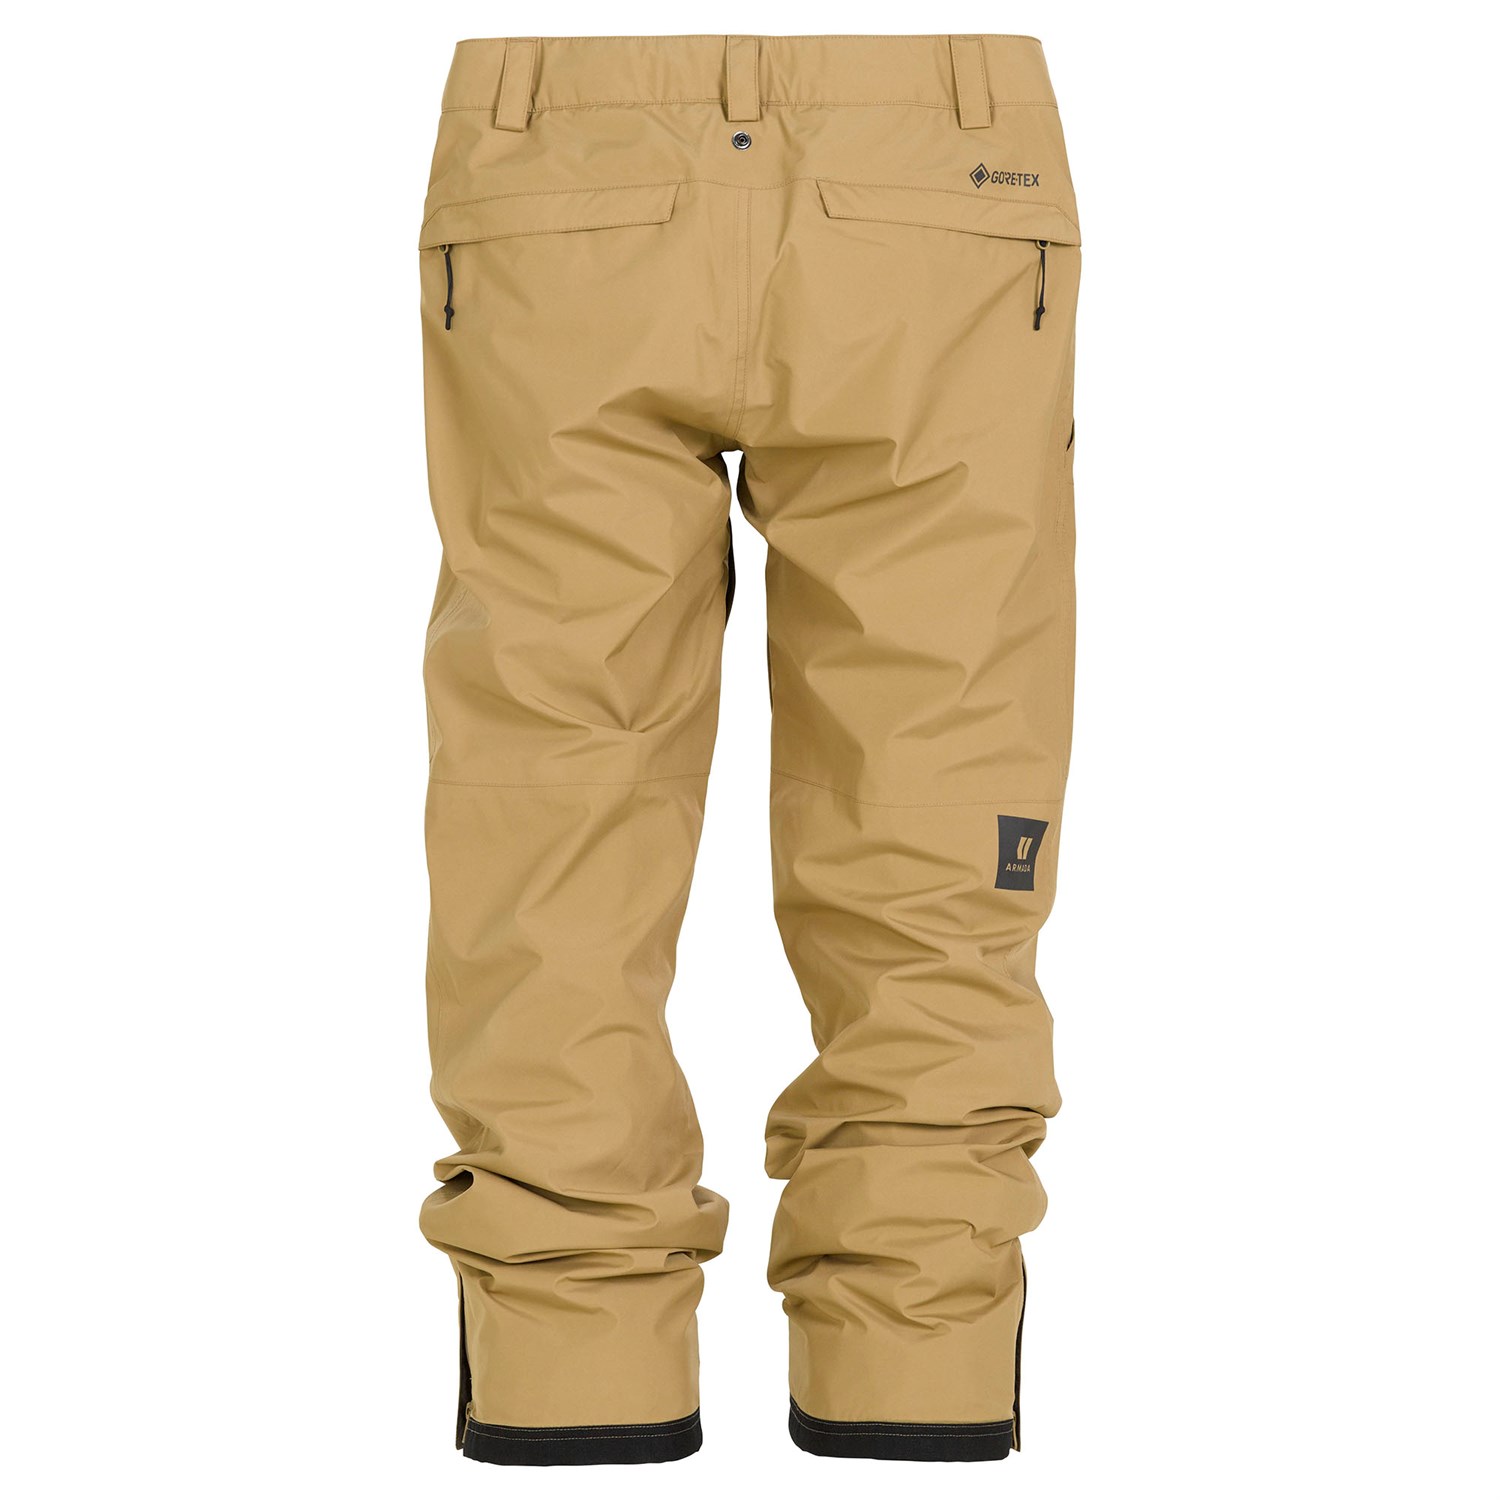 Men's Pants  Crescent Comfort Ultra Soft 5-Pocket Pant - Khaki